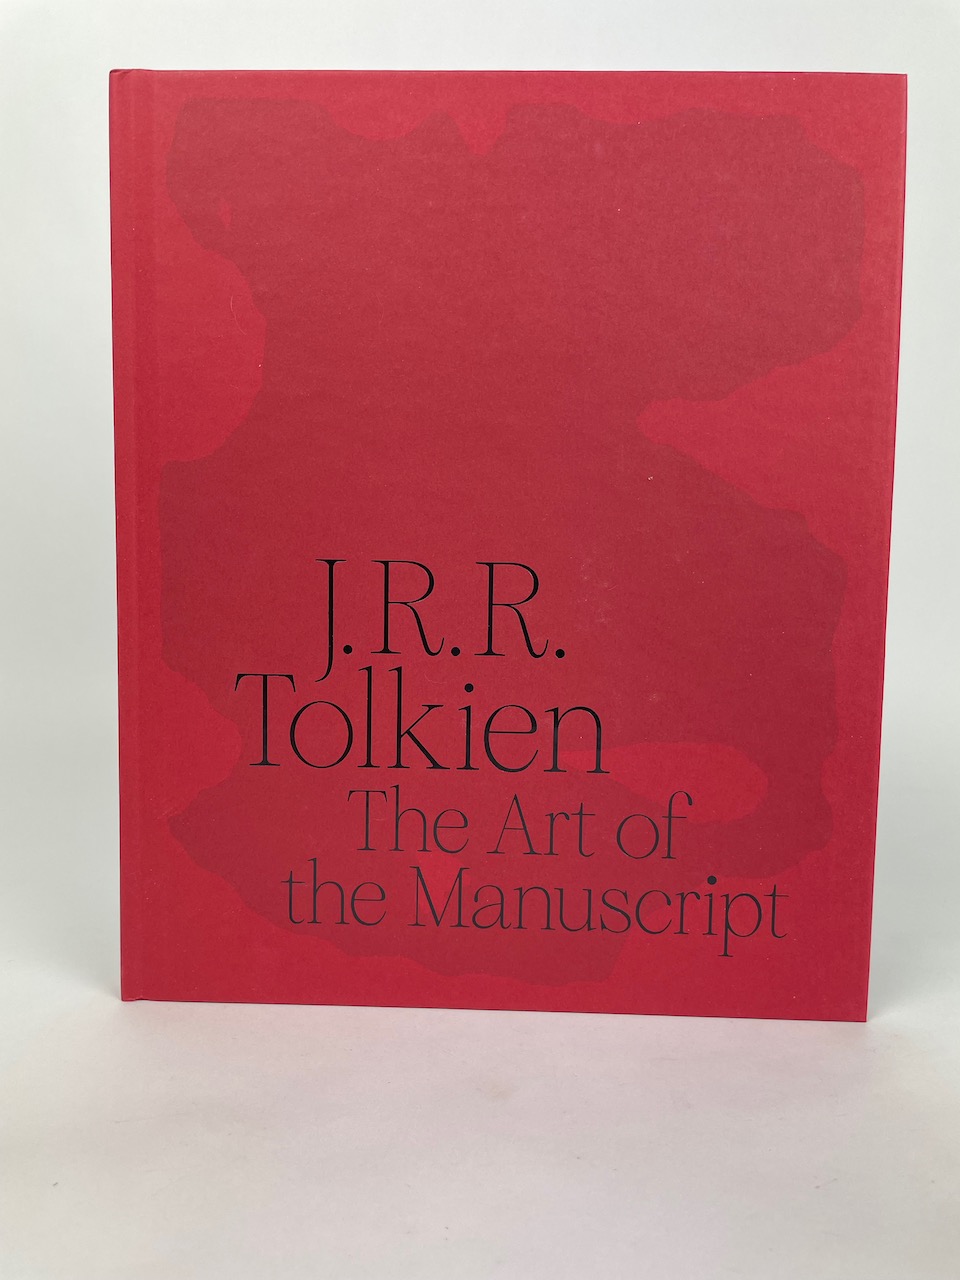 J.R.R. Tolkien: The Art of the Manuscript - exhibition catalogue